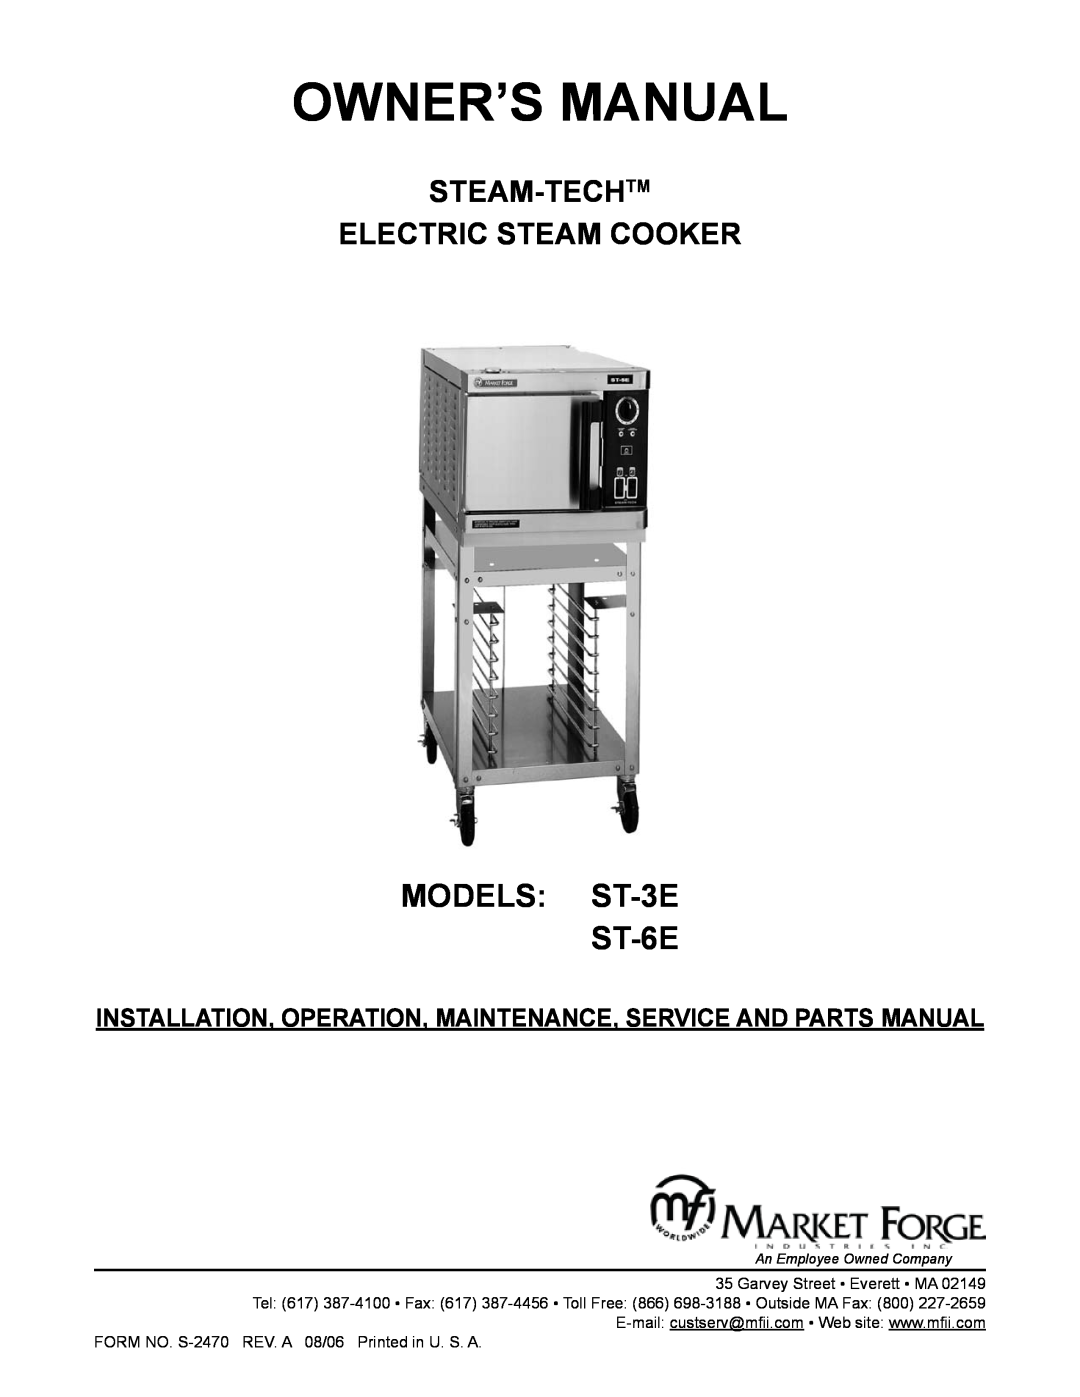 Market Forge Industries STEAM-TECH ELECTRIC STEAM COOKER manual MODELS ST-3E ST-6E, Steam-Techtm Electric Steam Cooker 